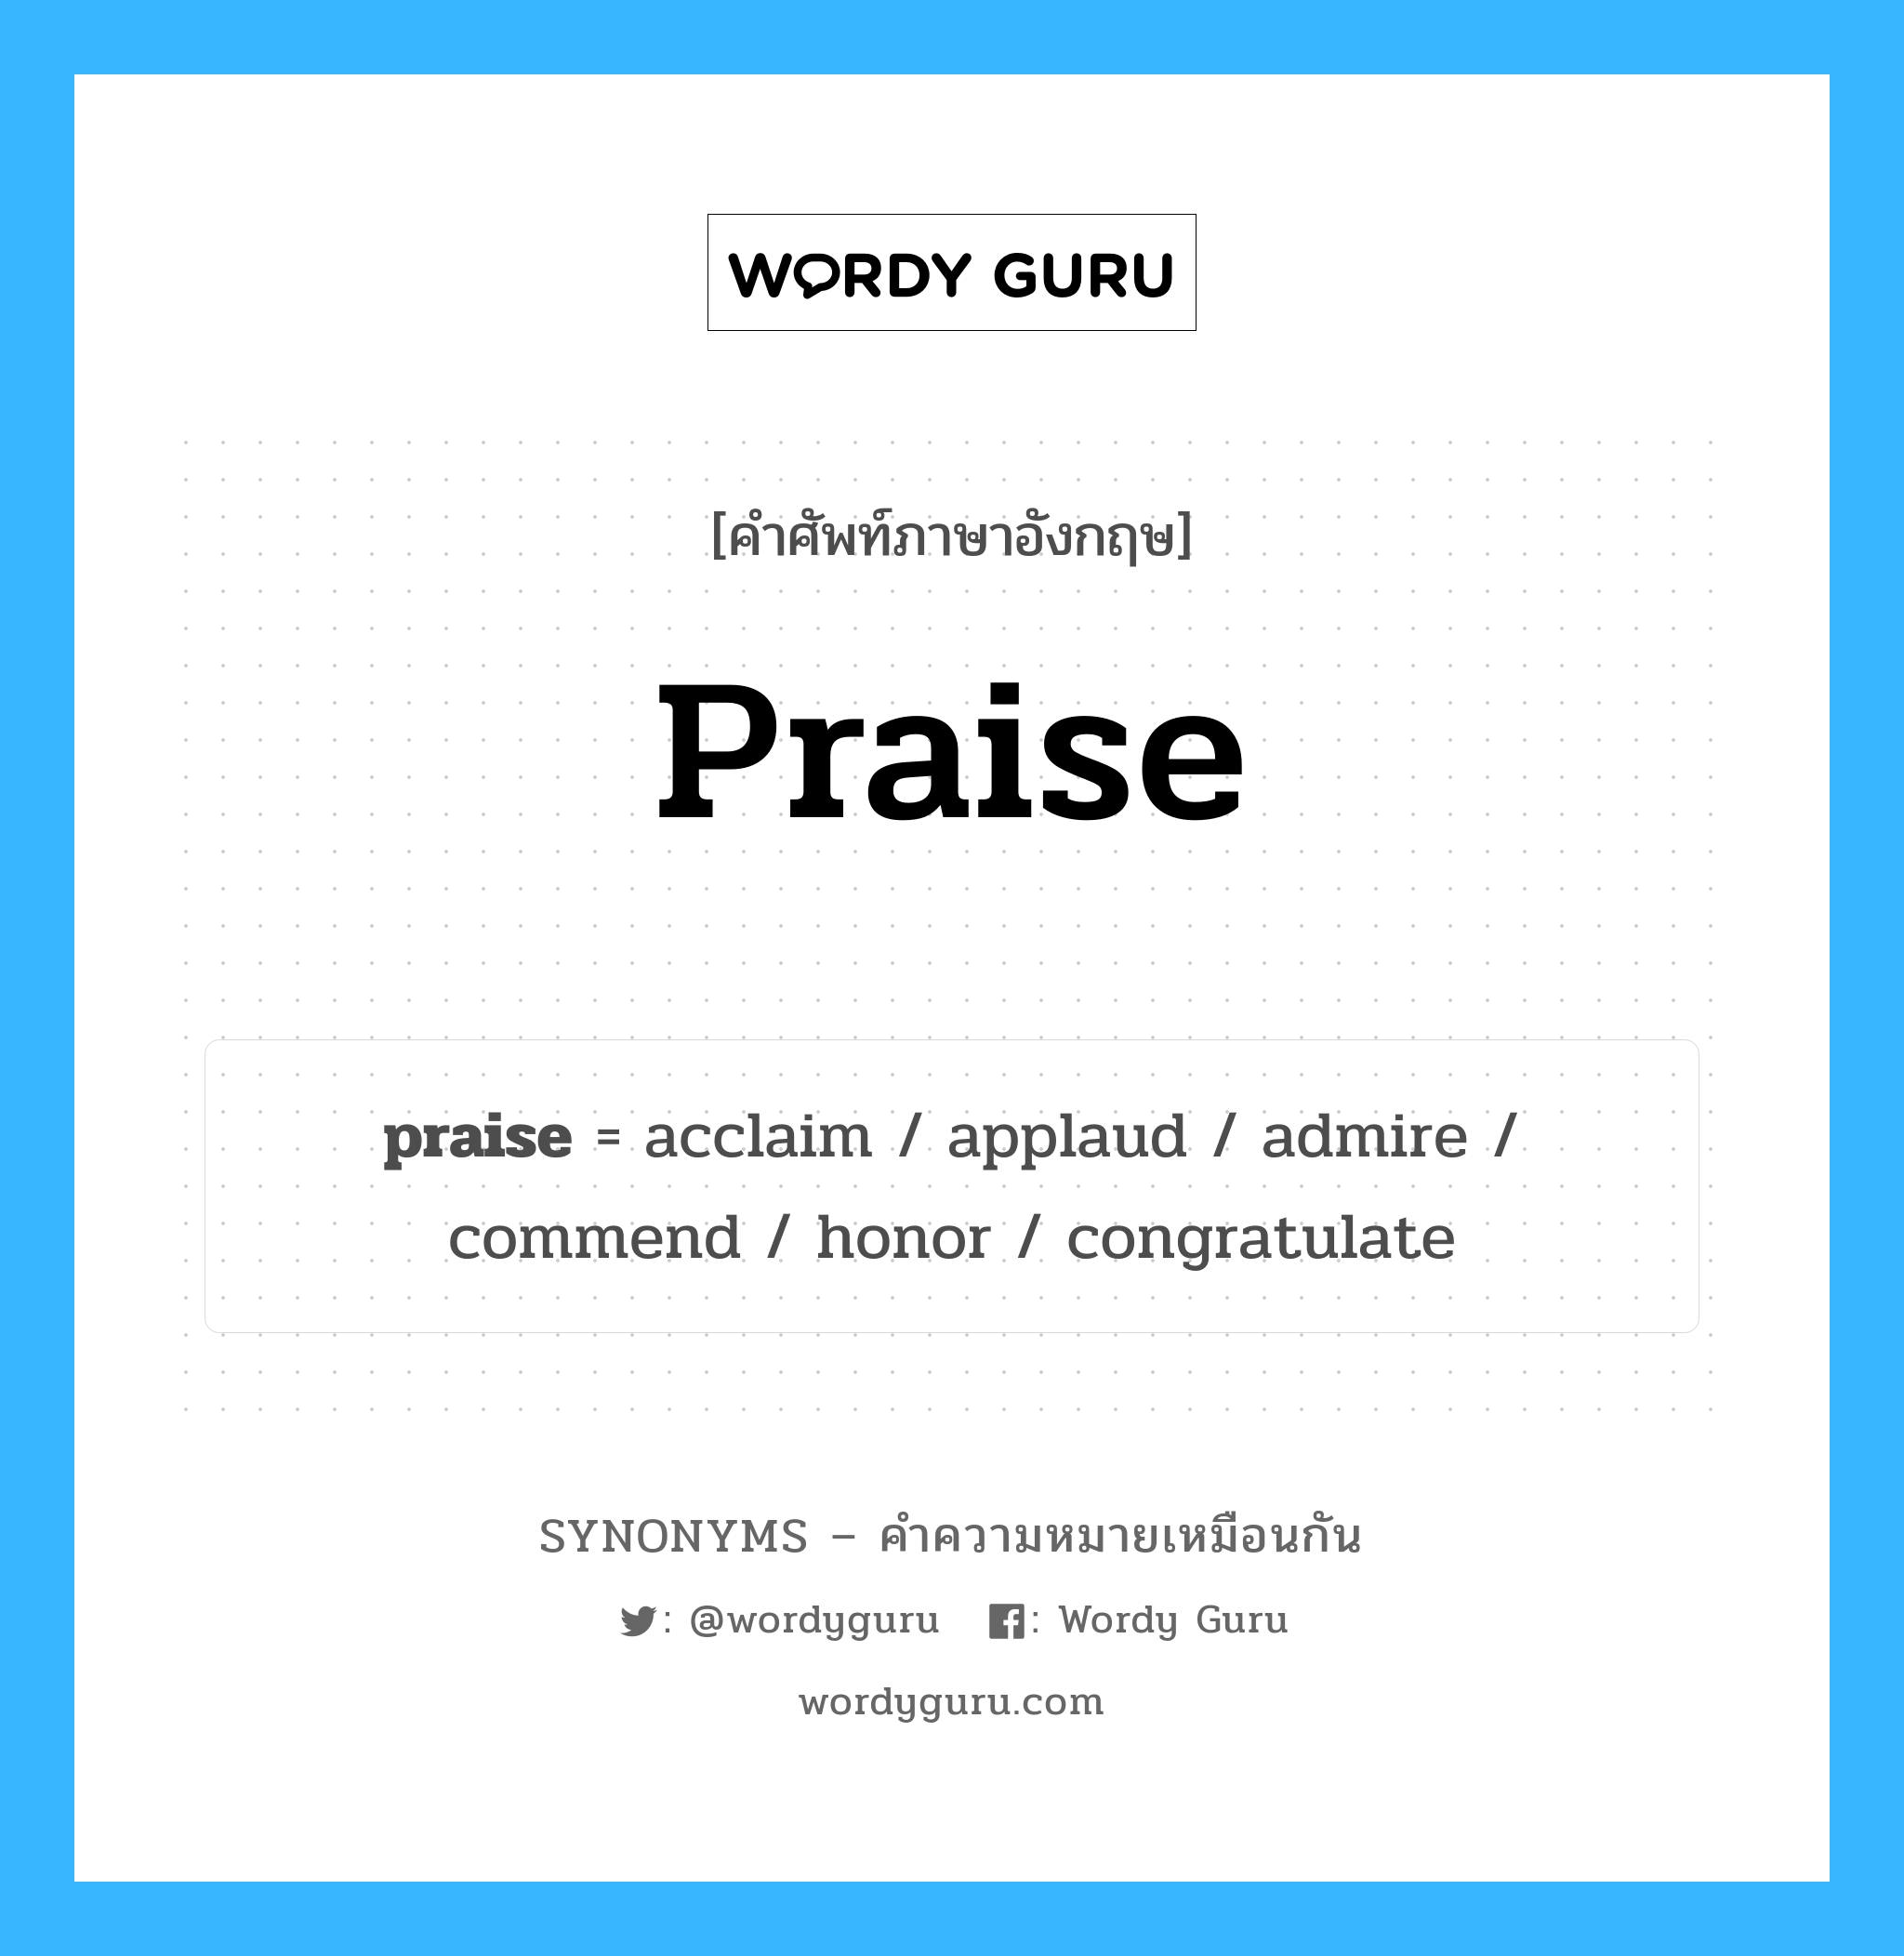 applaud เป็นหนึ่งใน praise และมีคำอื่น ๆ อีกดังนี้, คำศัพท์ภาษาอังกฤษ applaud ความหมายคล้ายกันกับ praise แปลว่า ตบมือ หมวด praise